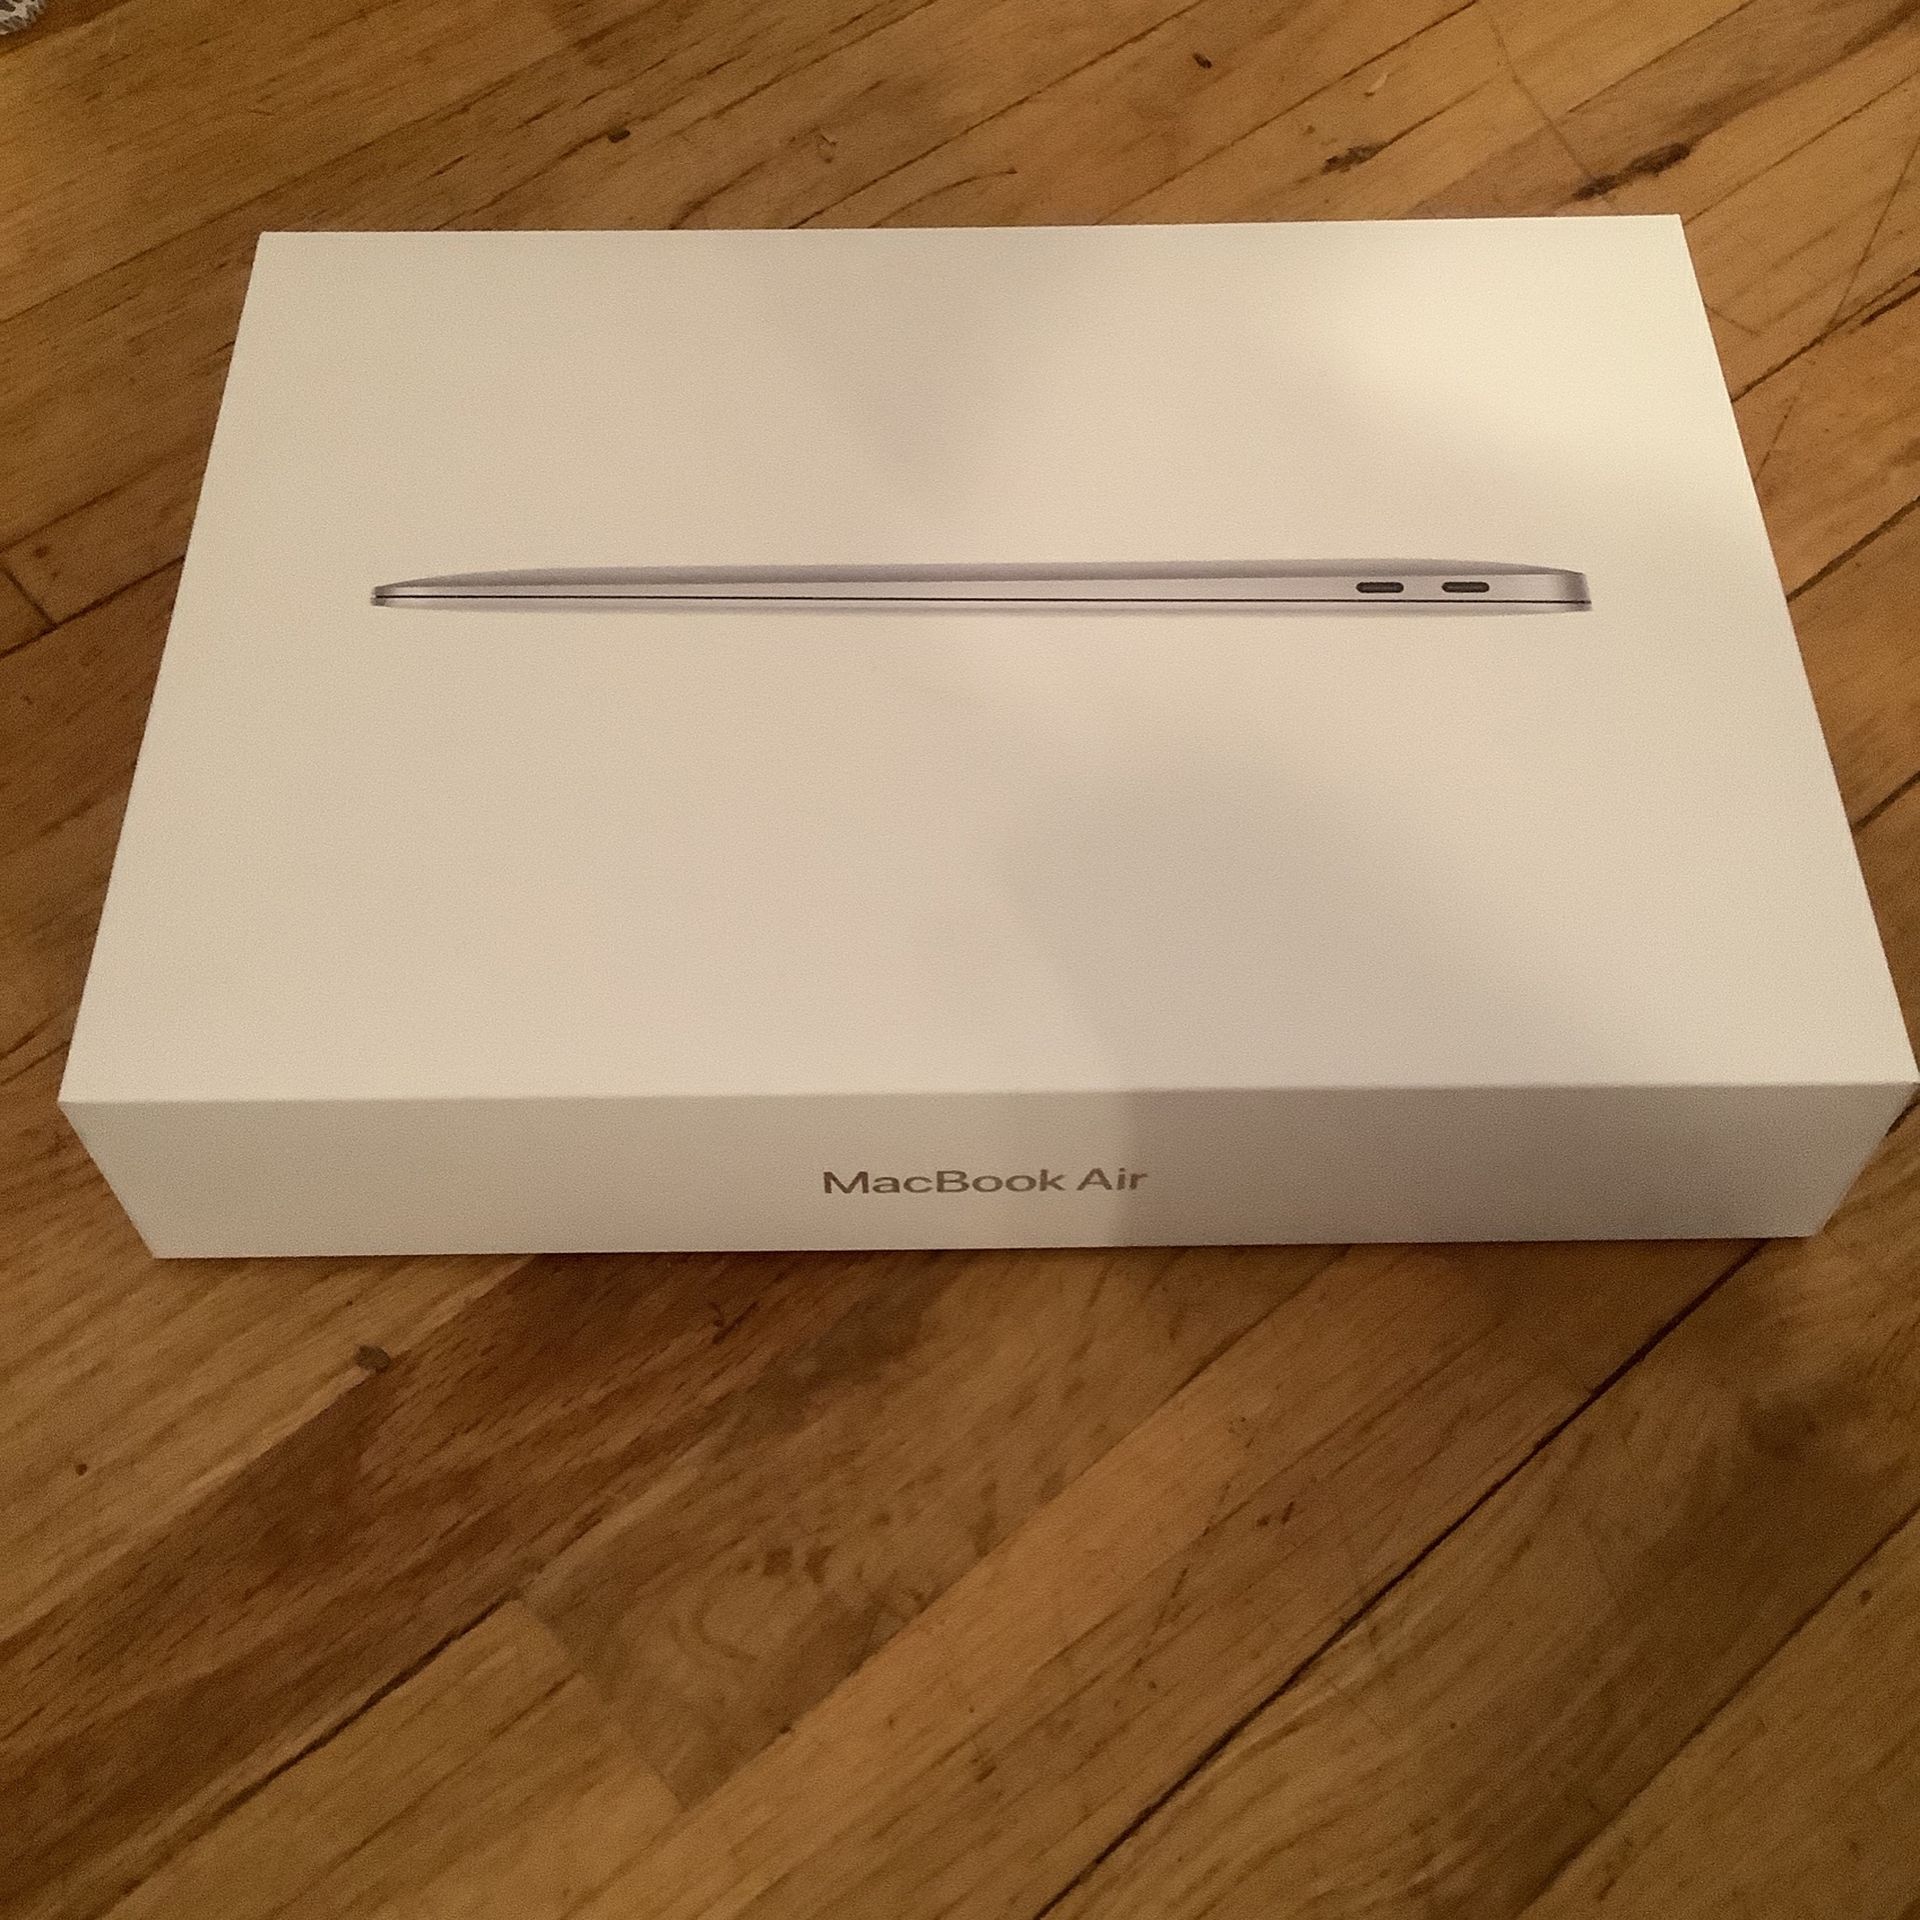 MacBook Air Box (no Laptop)